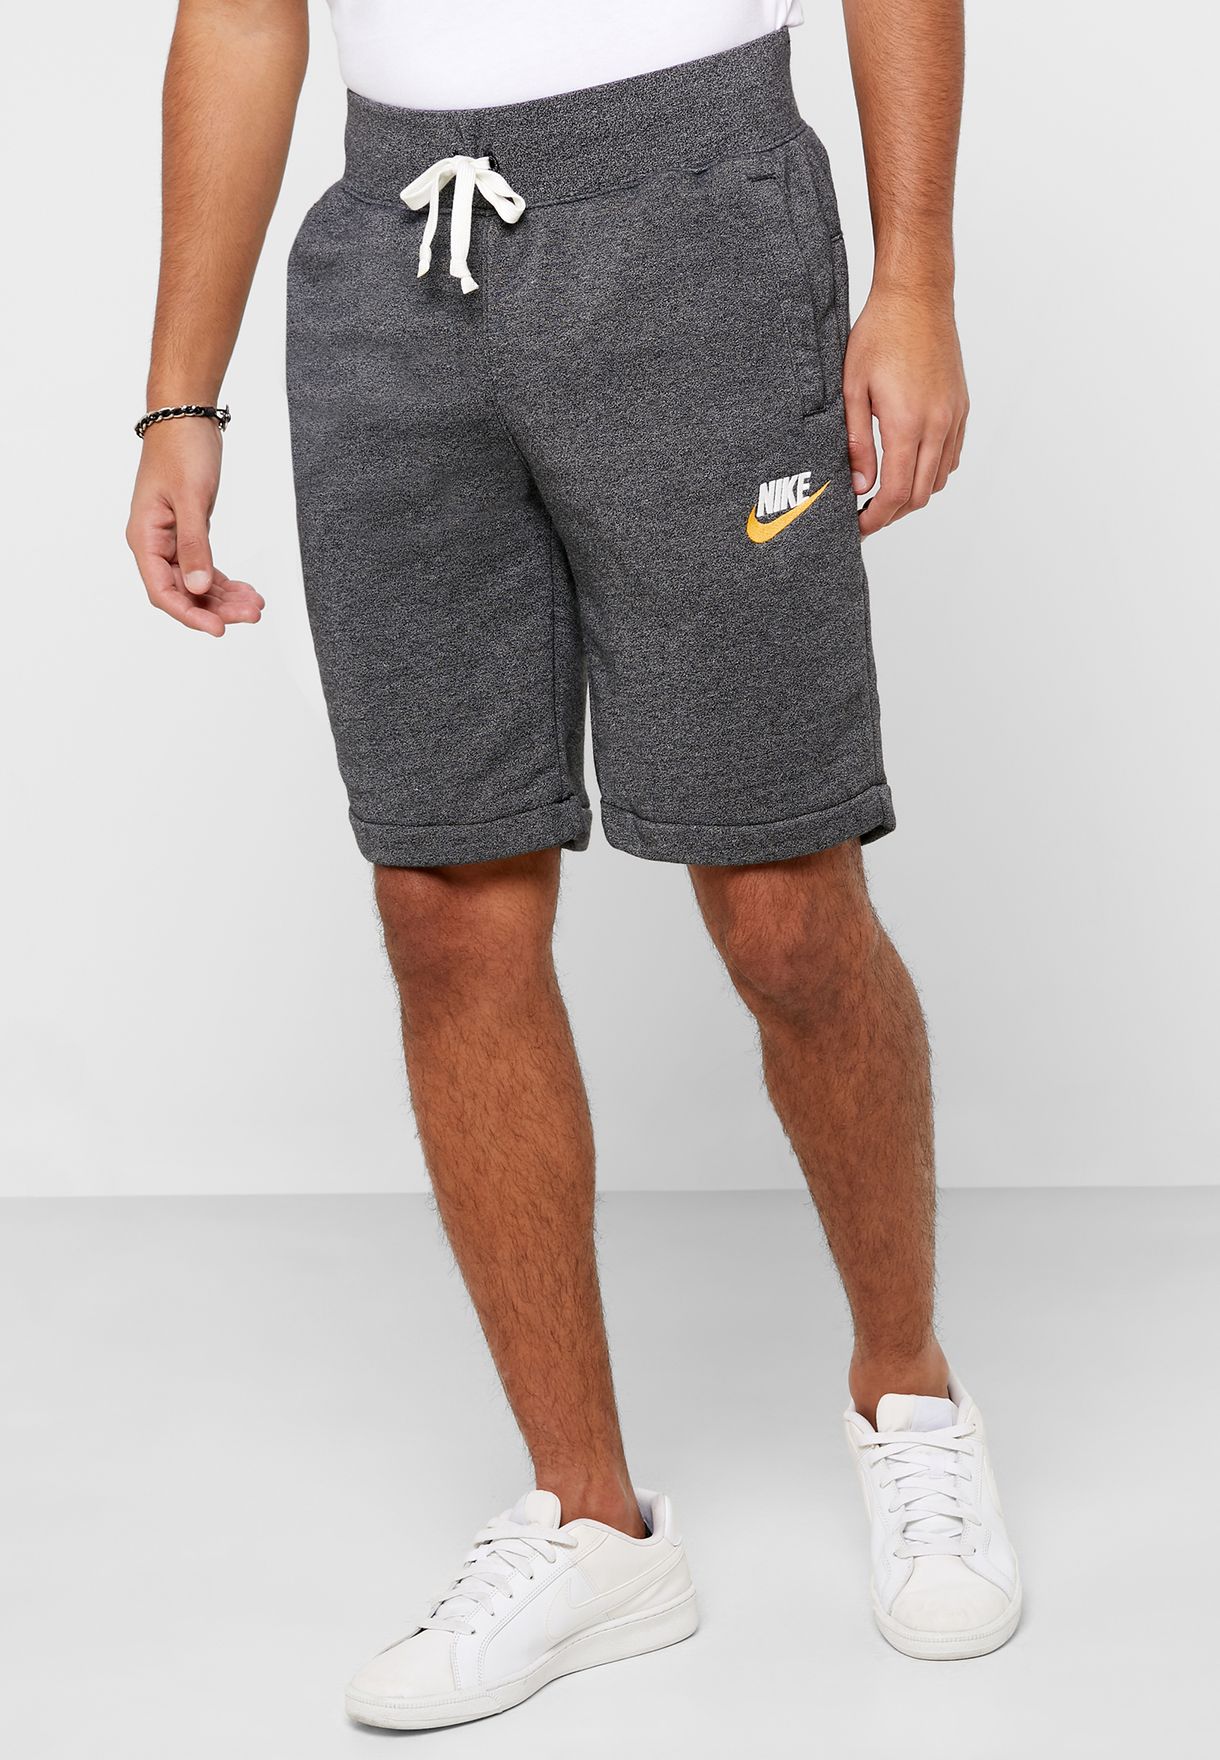 nike men's heritage shorts